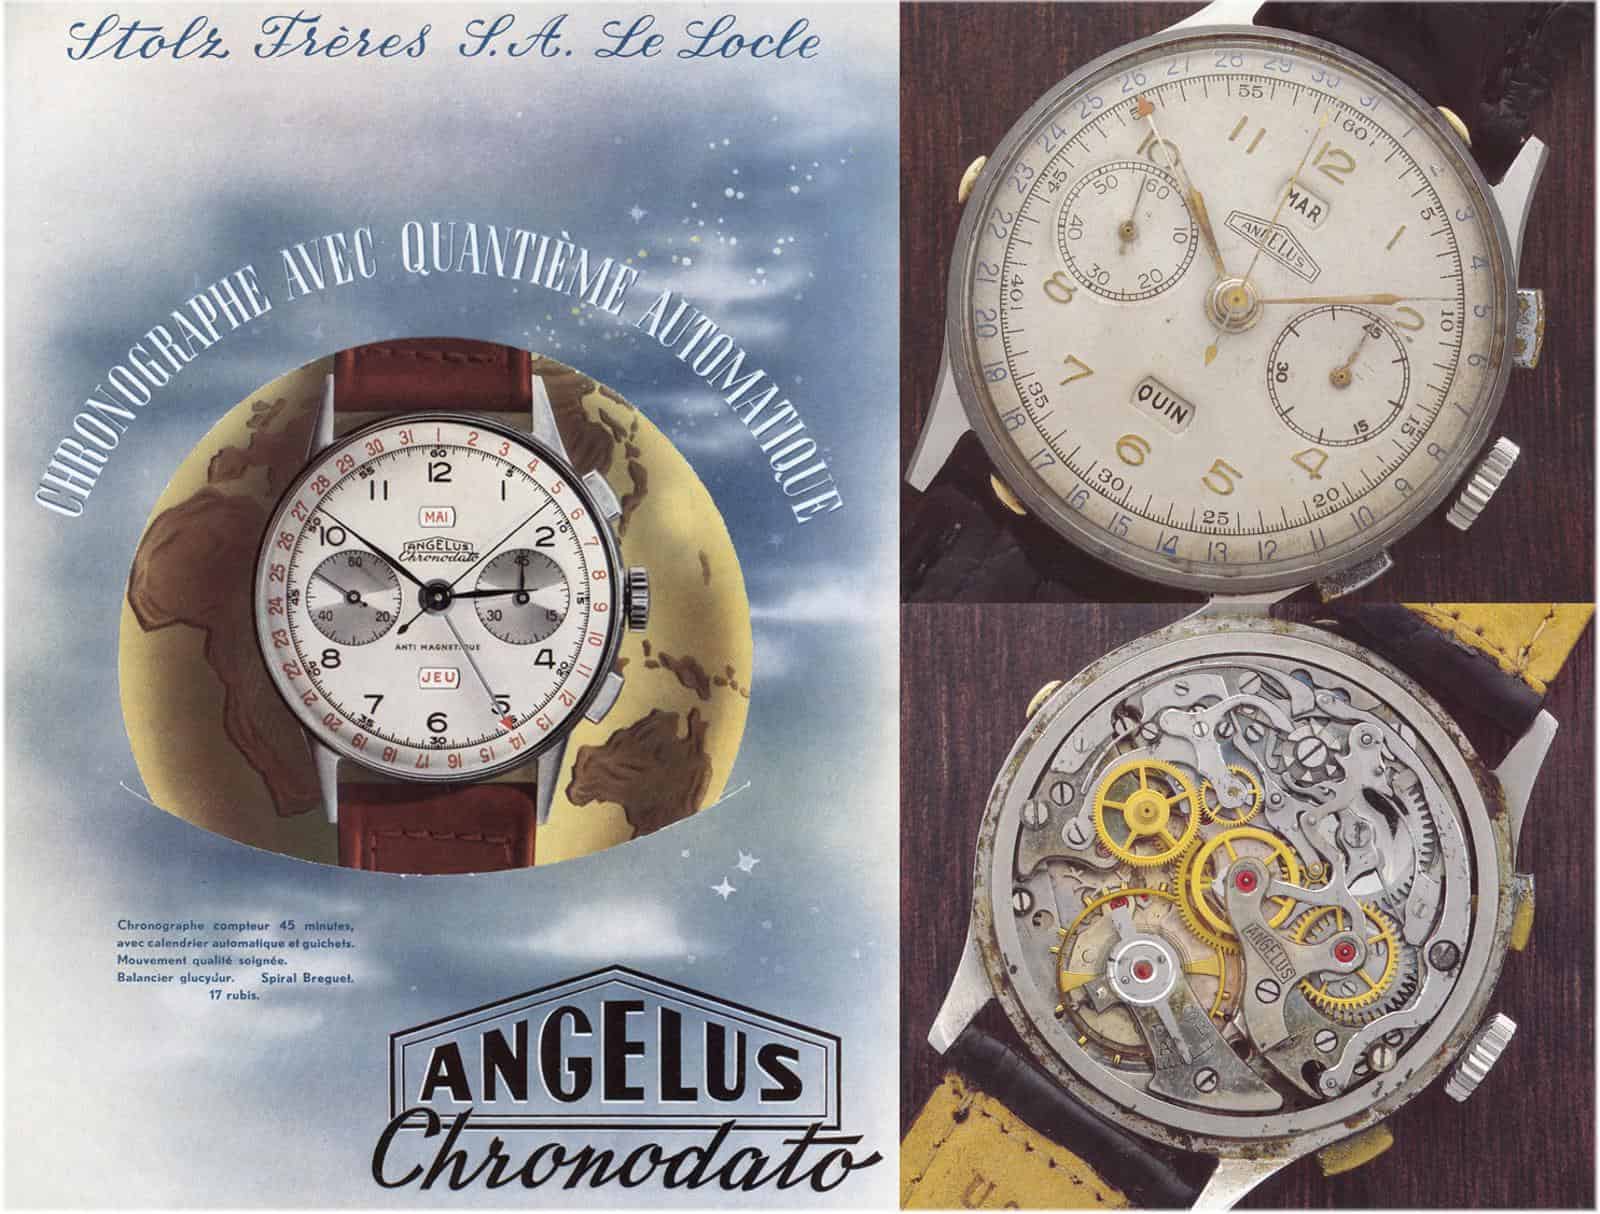 Angelus Chronodato Chronograph von 1950